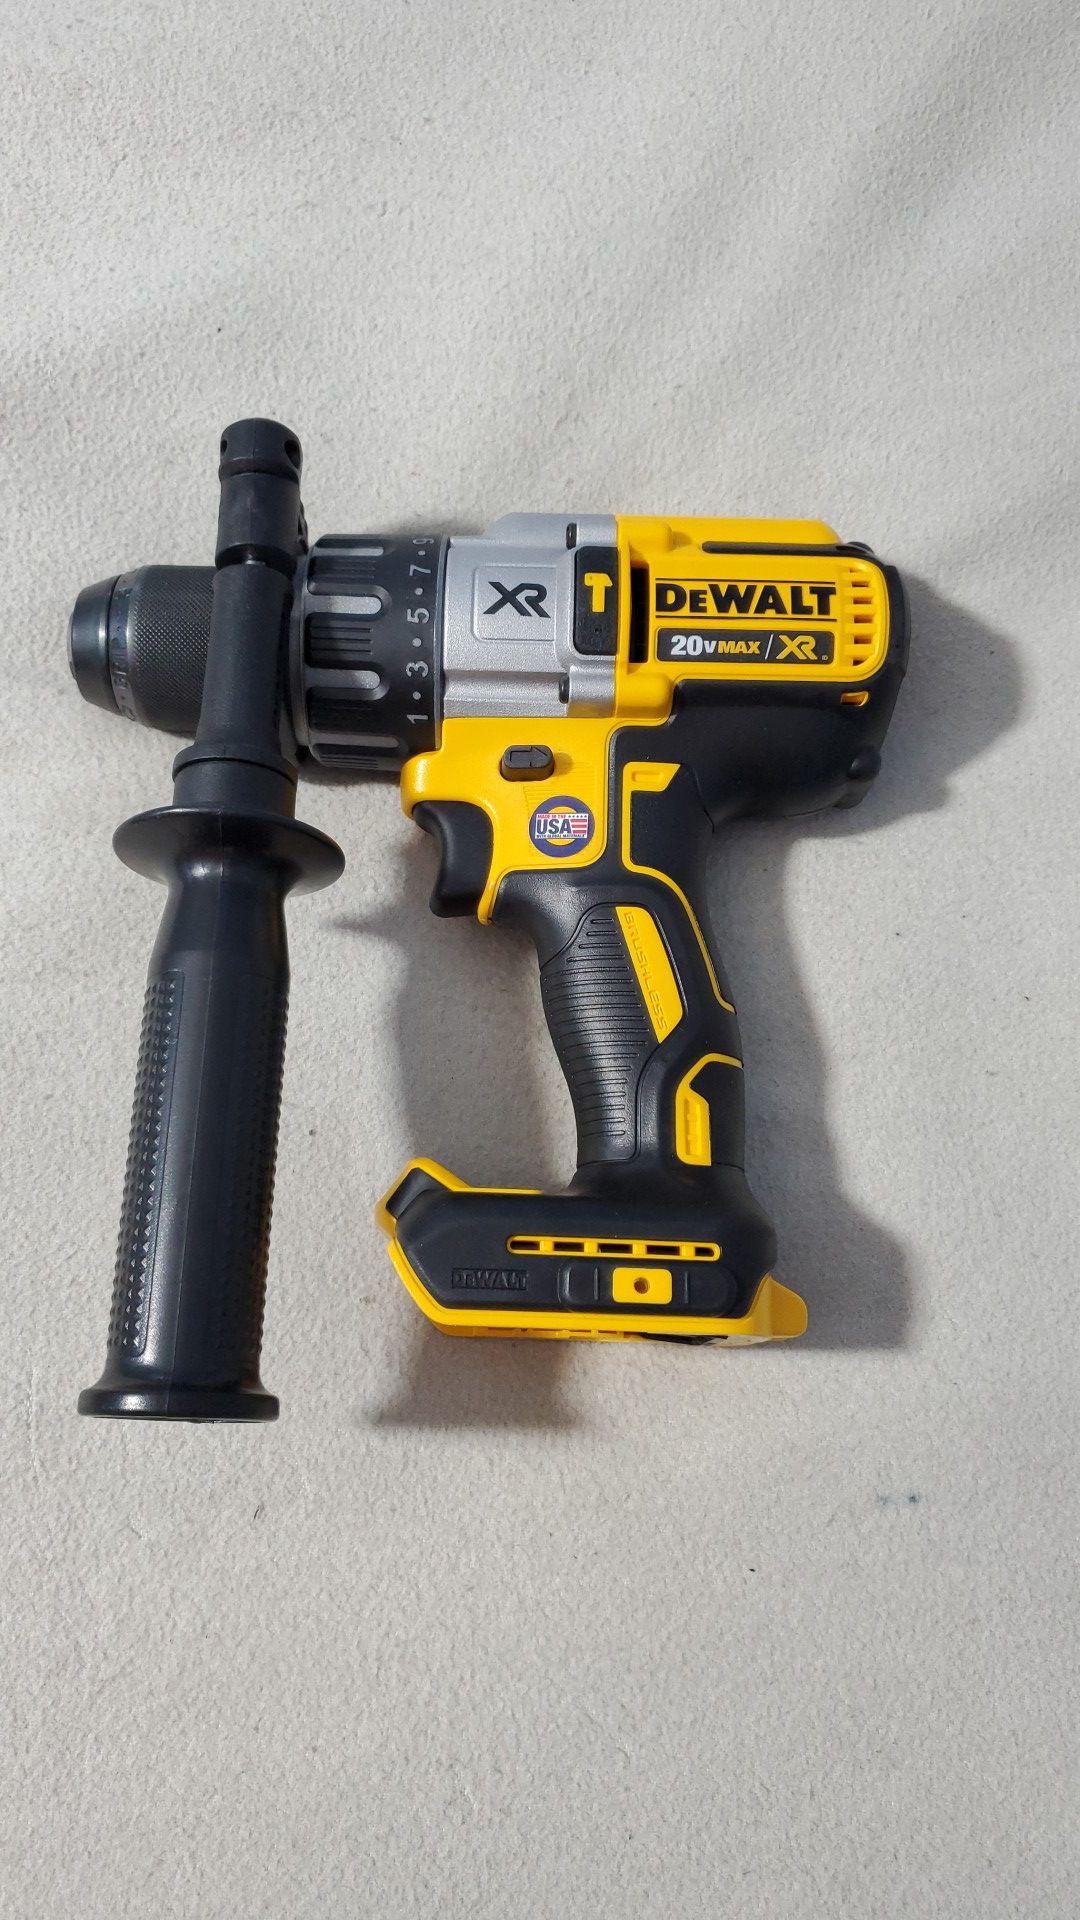 Dewalt 20V Max XR Brushless Half Inch Hammer Drill Driver. Model DCD996. New. Price is firm